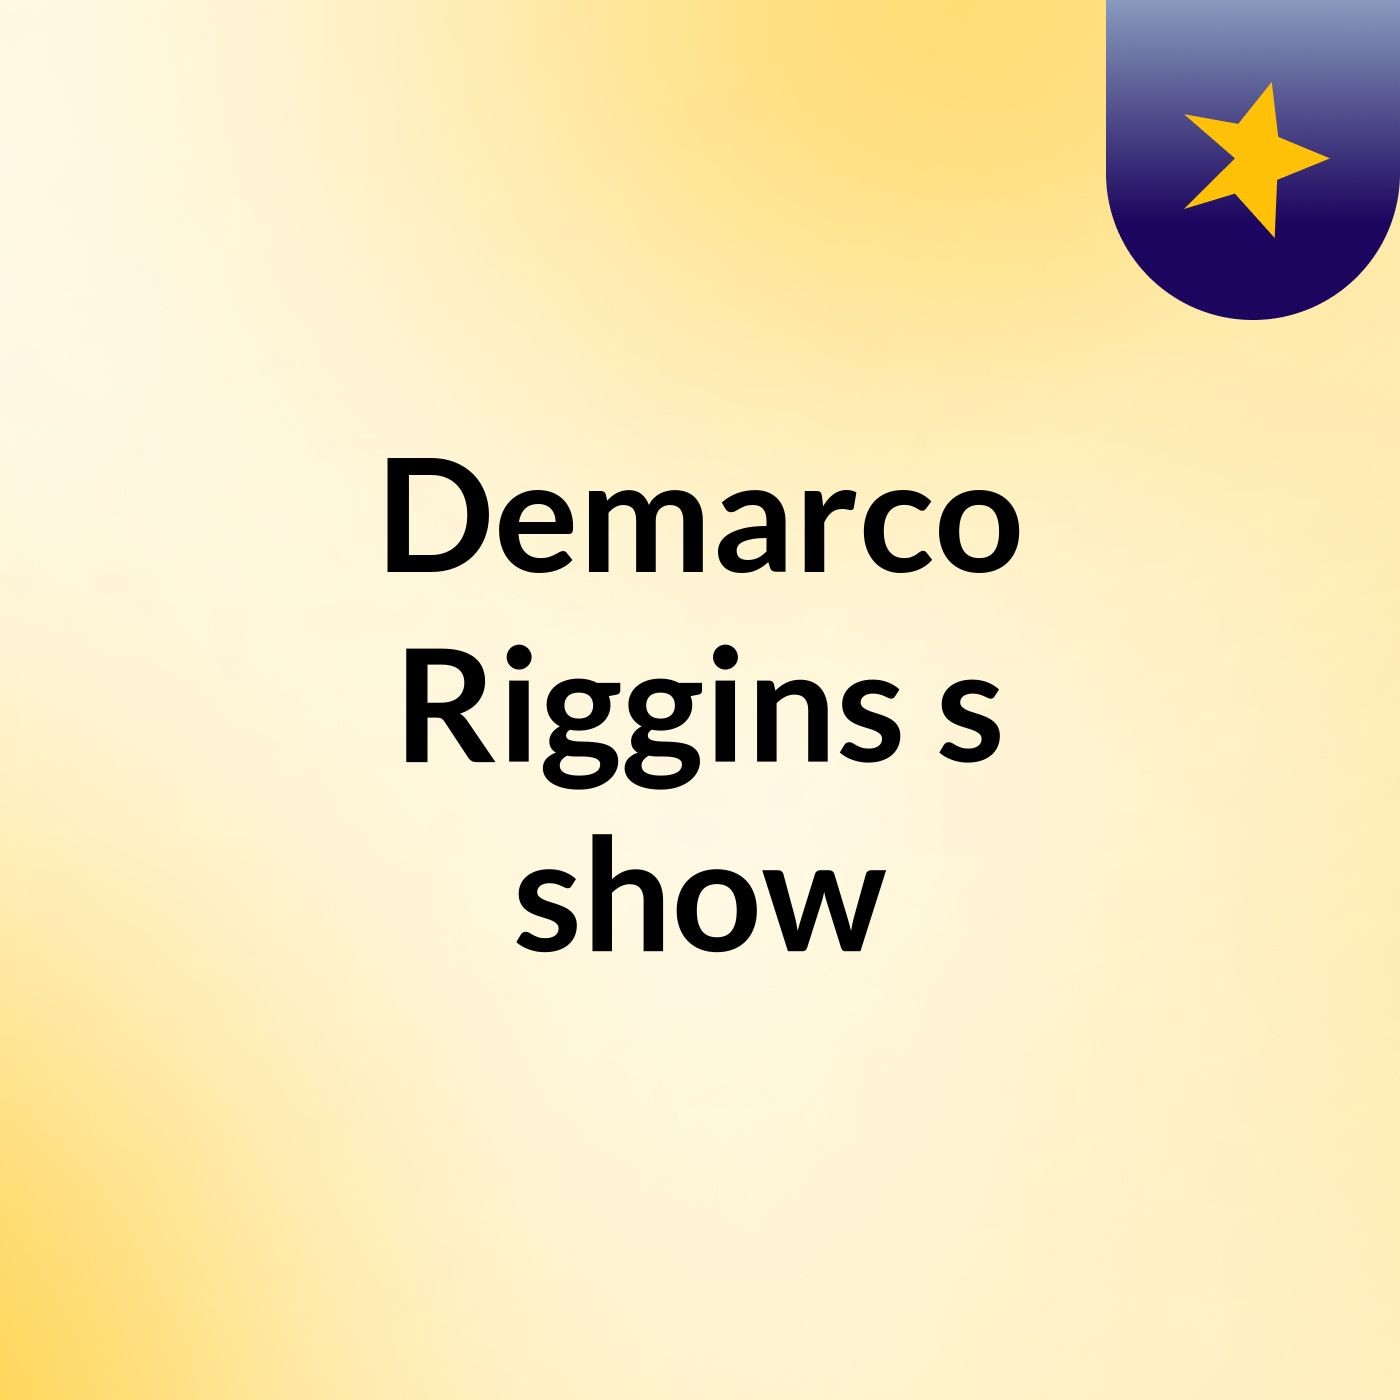 Episode 2 - Demarco Riggins's show